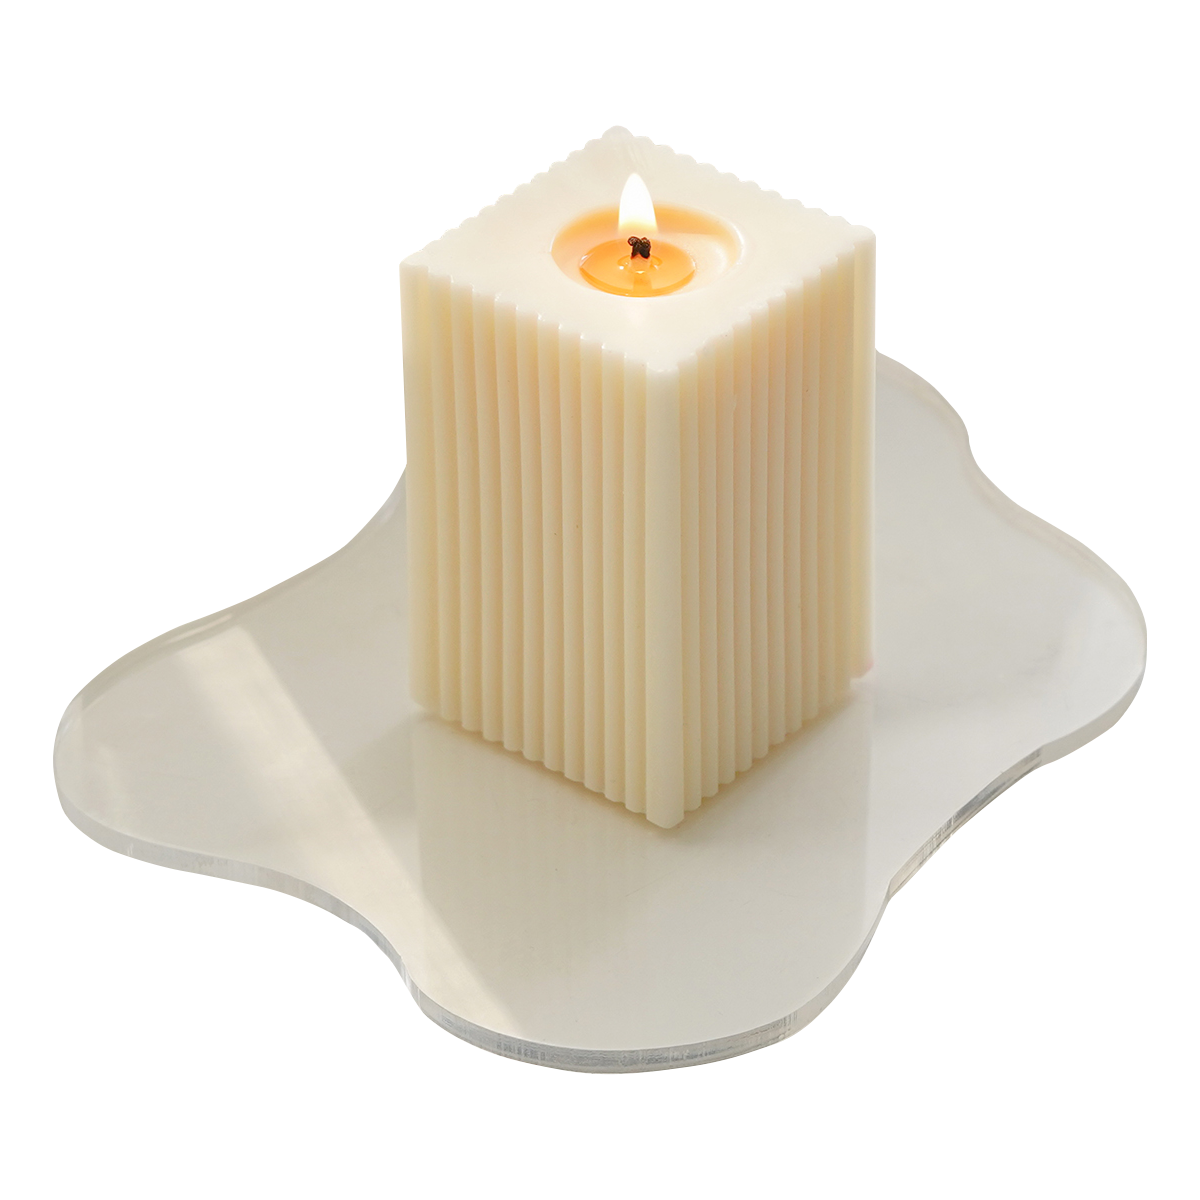 a lit ribbed rectangular soy pillar candle on irregular shape wavy acrylic coaster